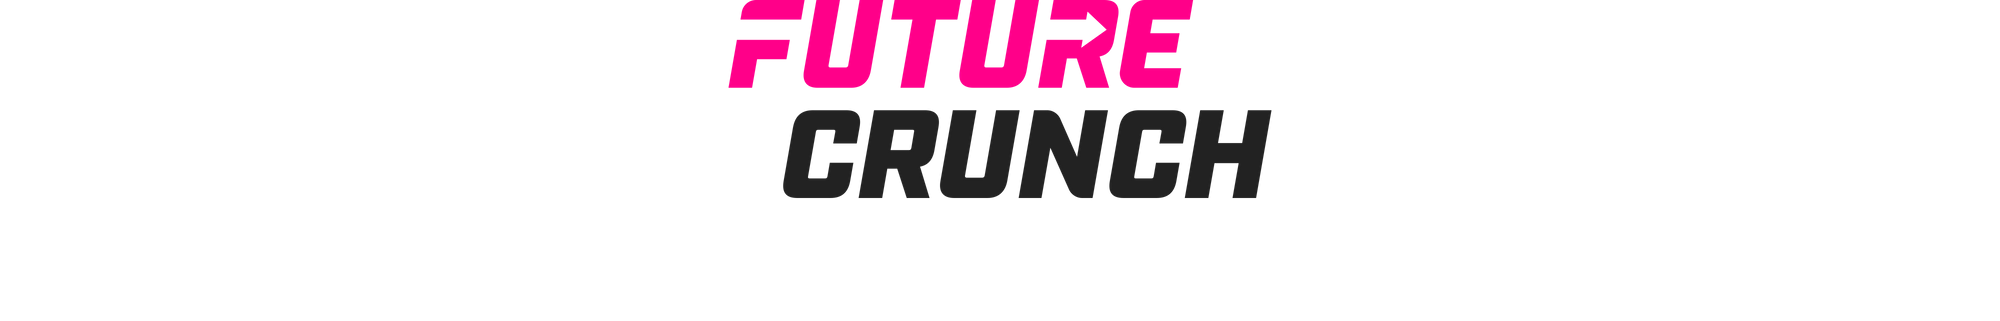 Future Crunch logo